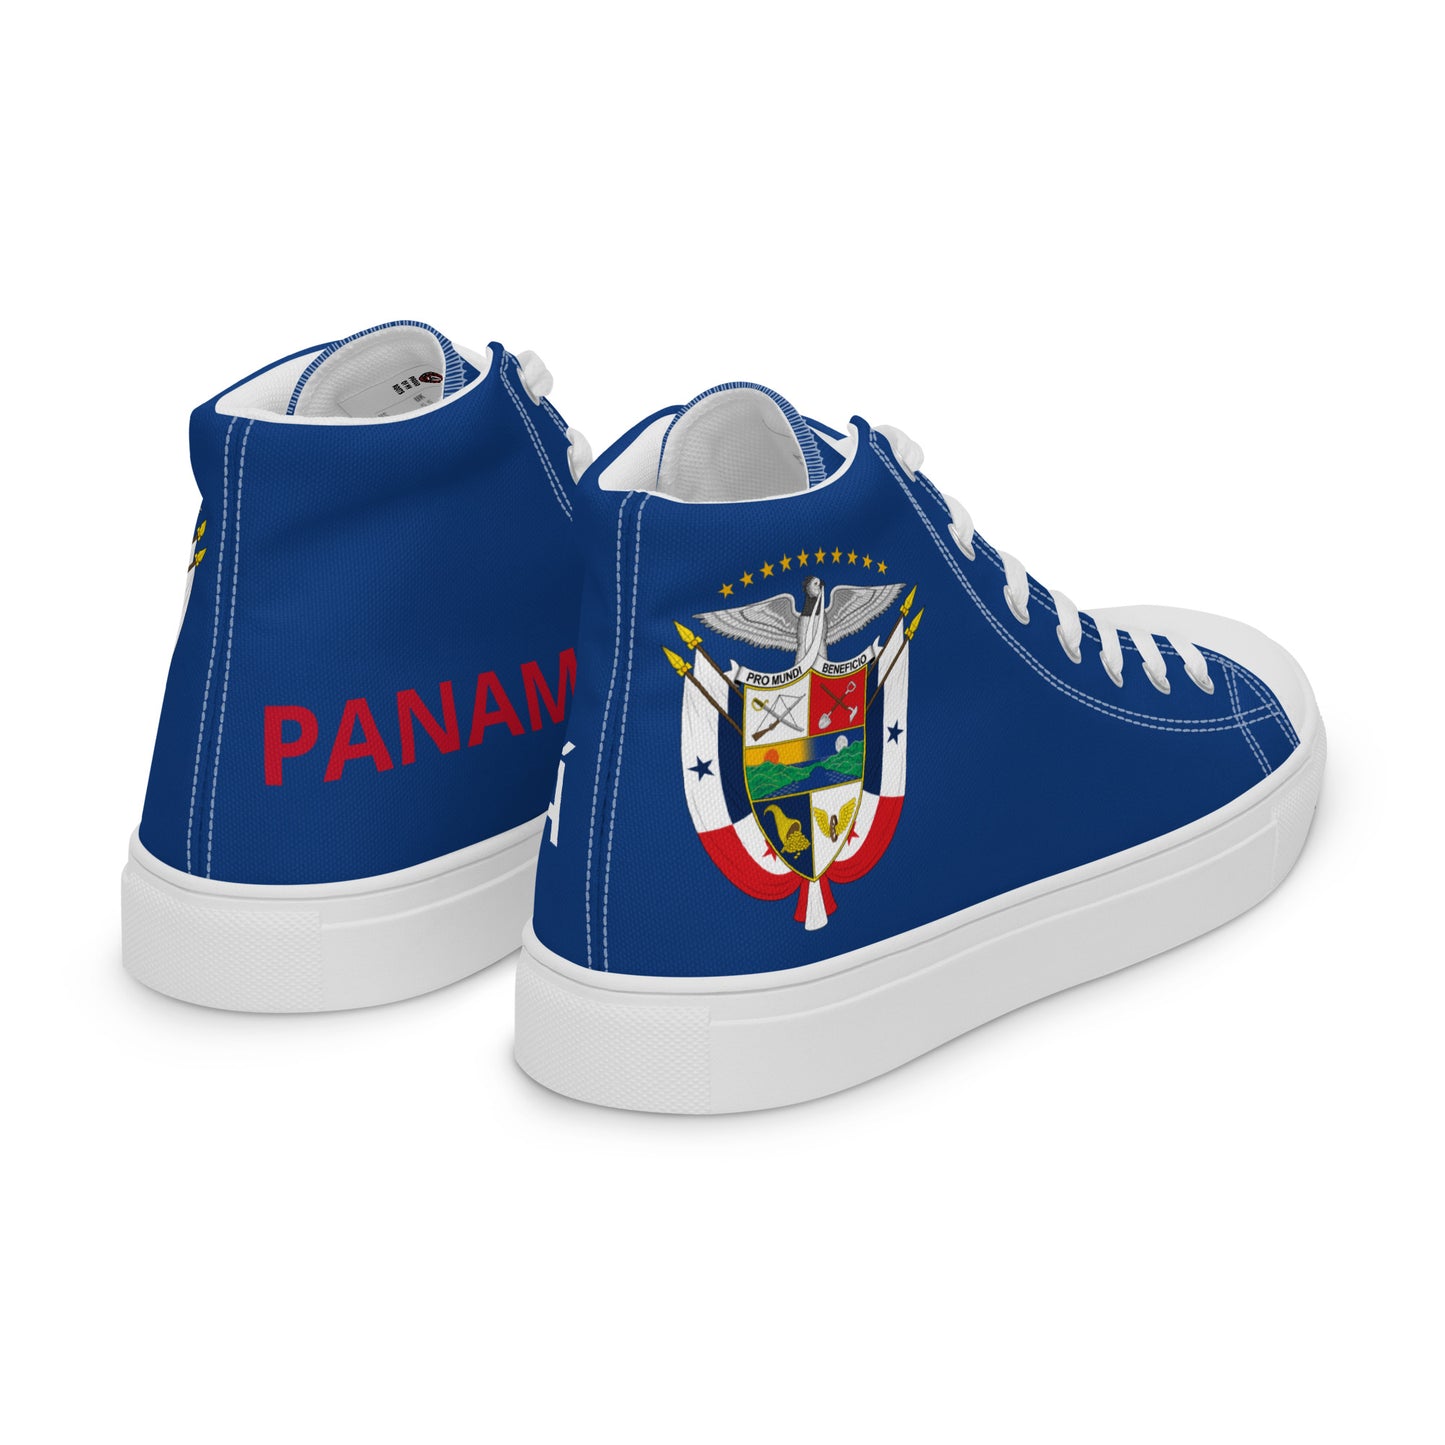 Panamá - Men - Blue - High top shoes